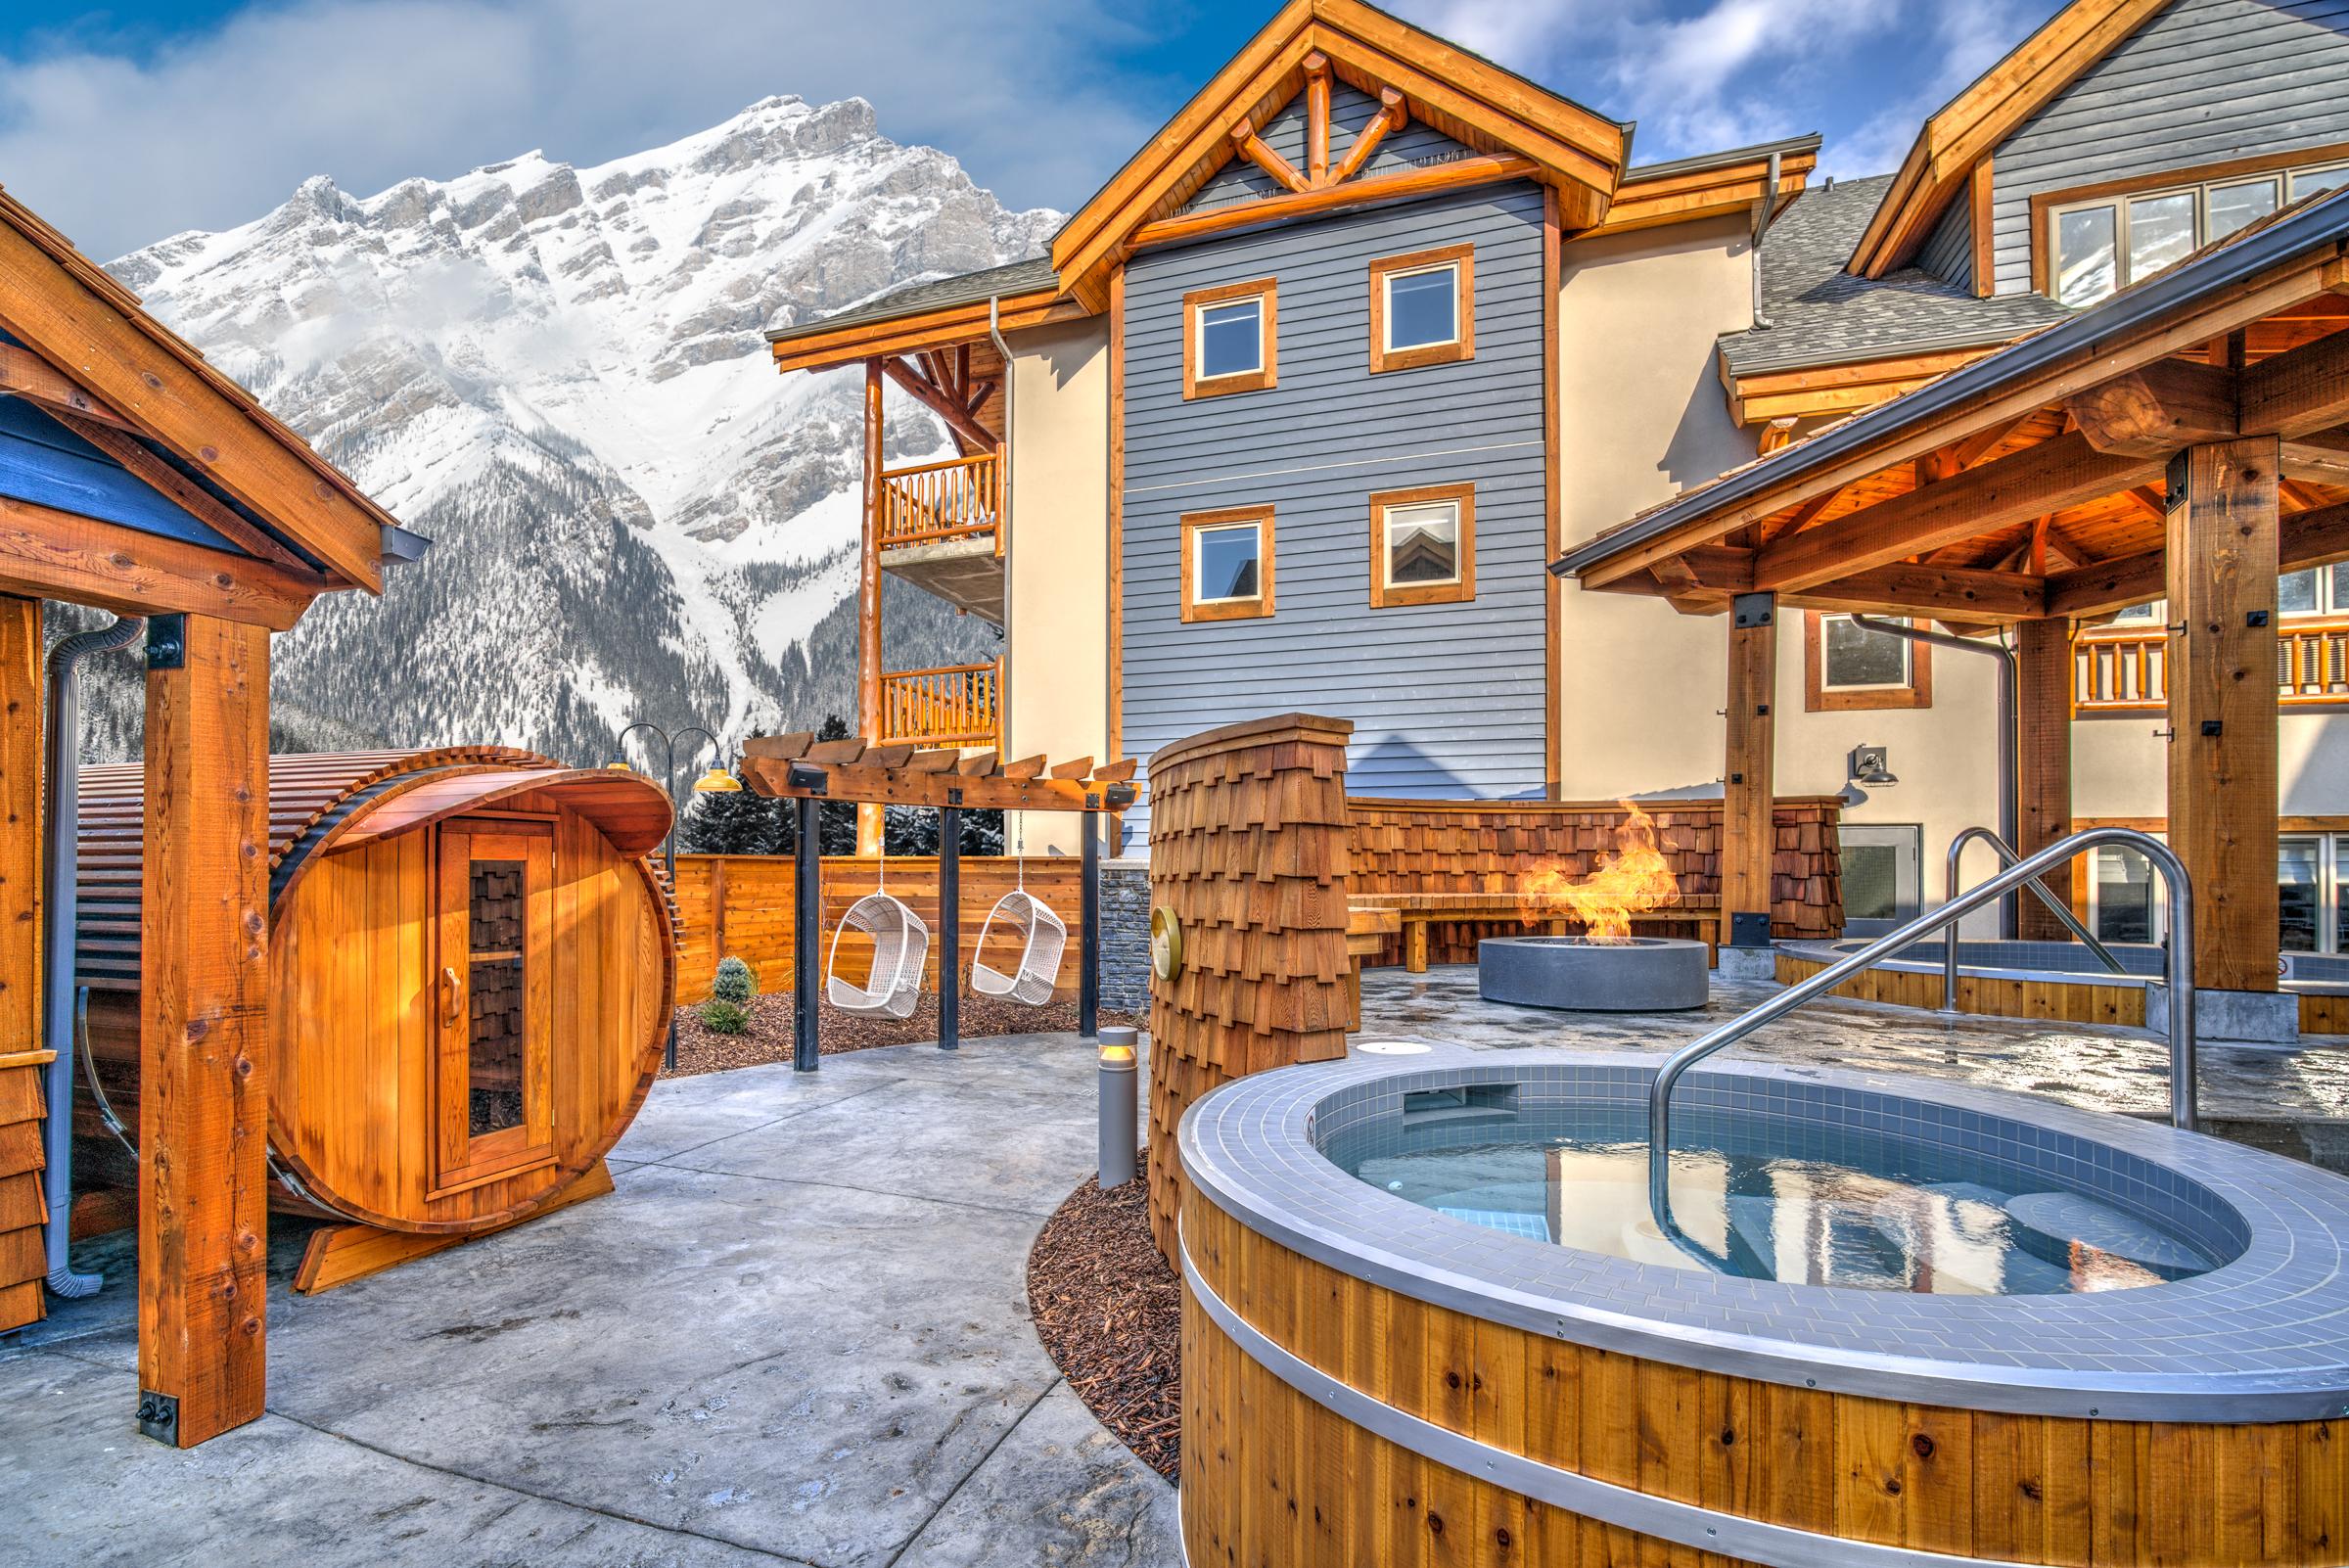 Canalta Lodge Banff Exterior foto